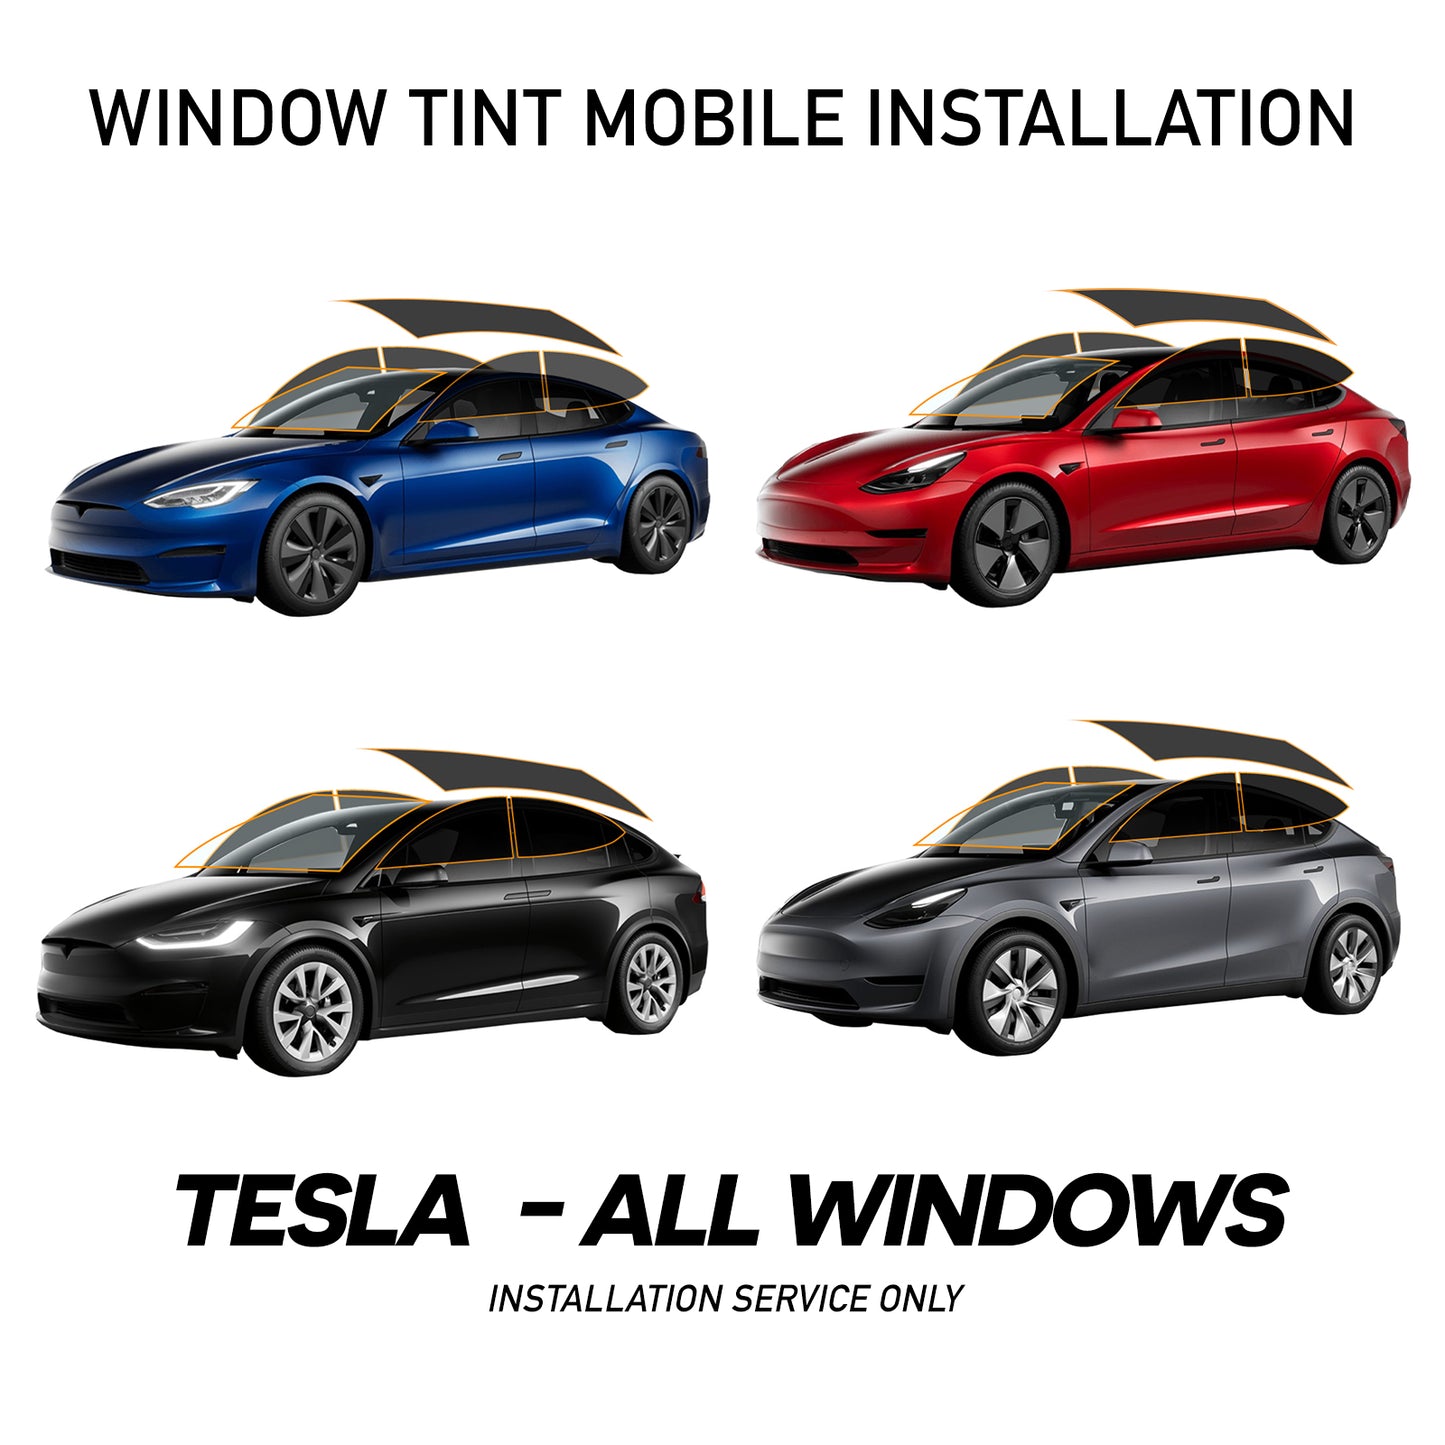 Window Tint Mobile Installation For Tesla - All Windows